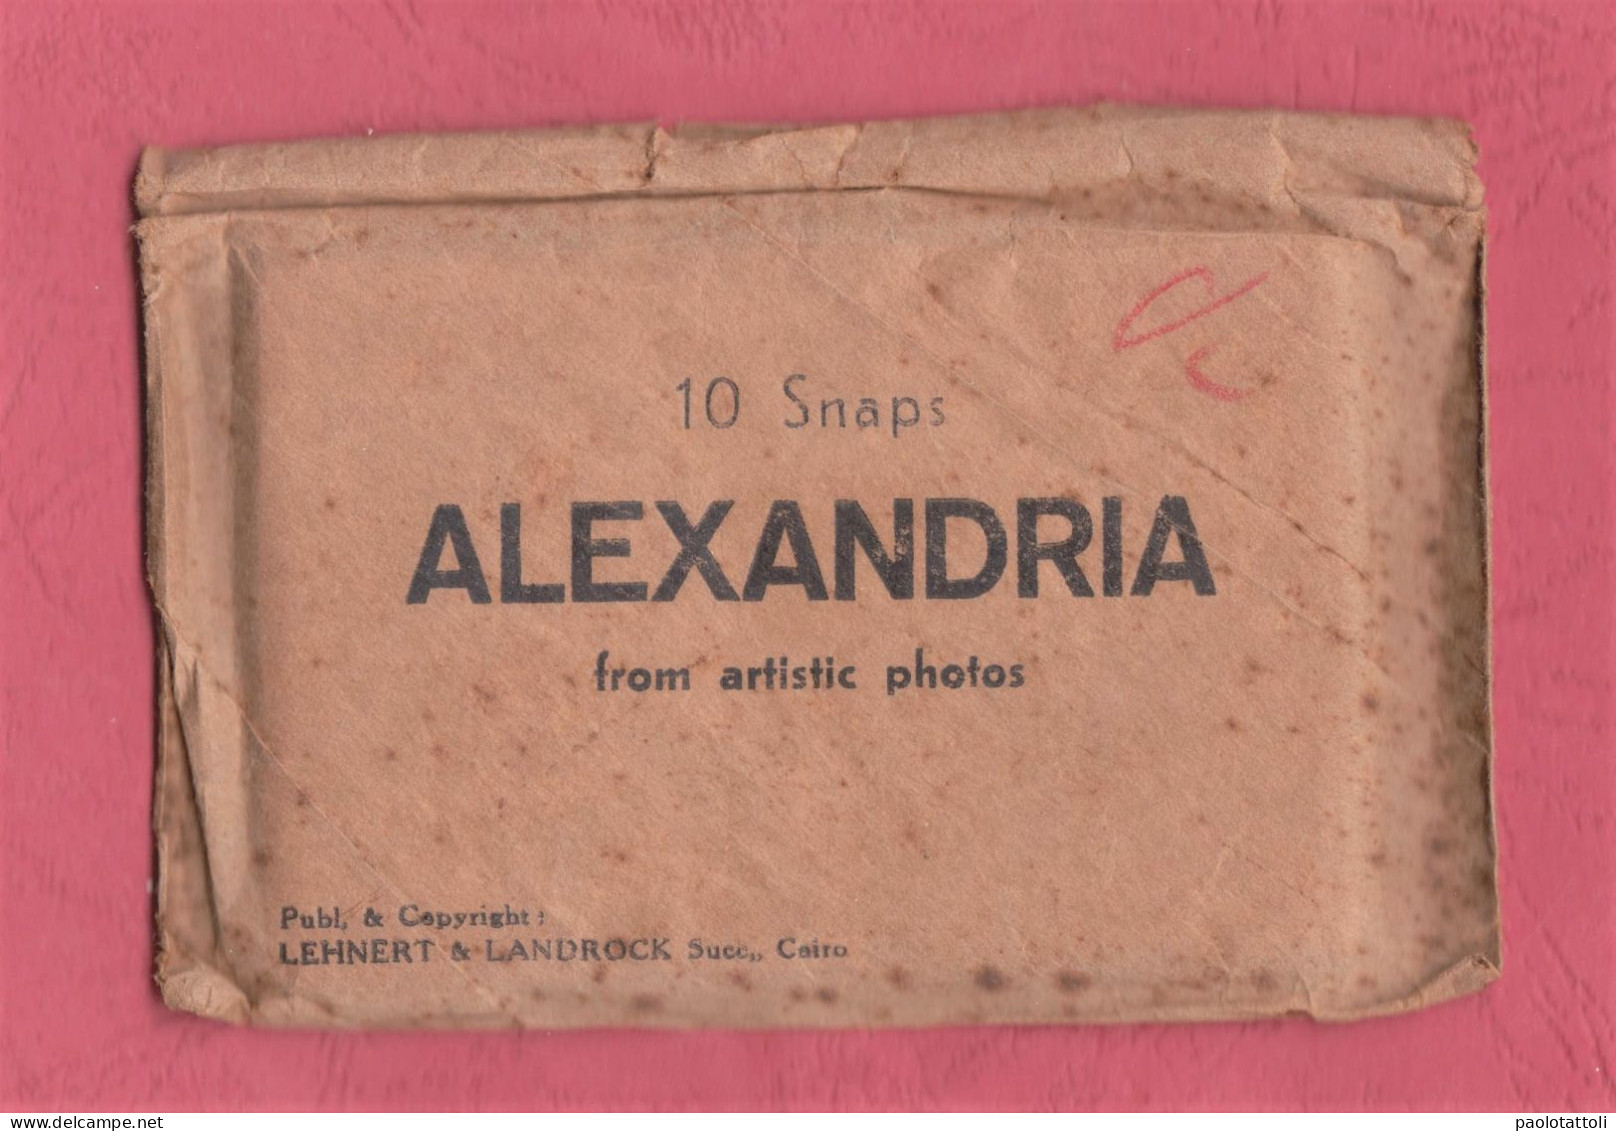 Egypt. Alexandria. 10 Snap From Artistic Photos. Publ. & Copyright Lehnert & Landrock. 92x 60mm. - Obj. 'Herinnering Van'